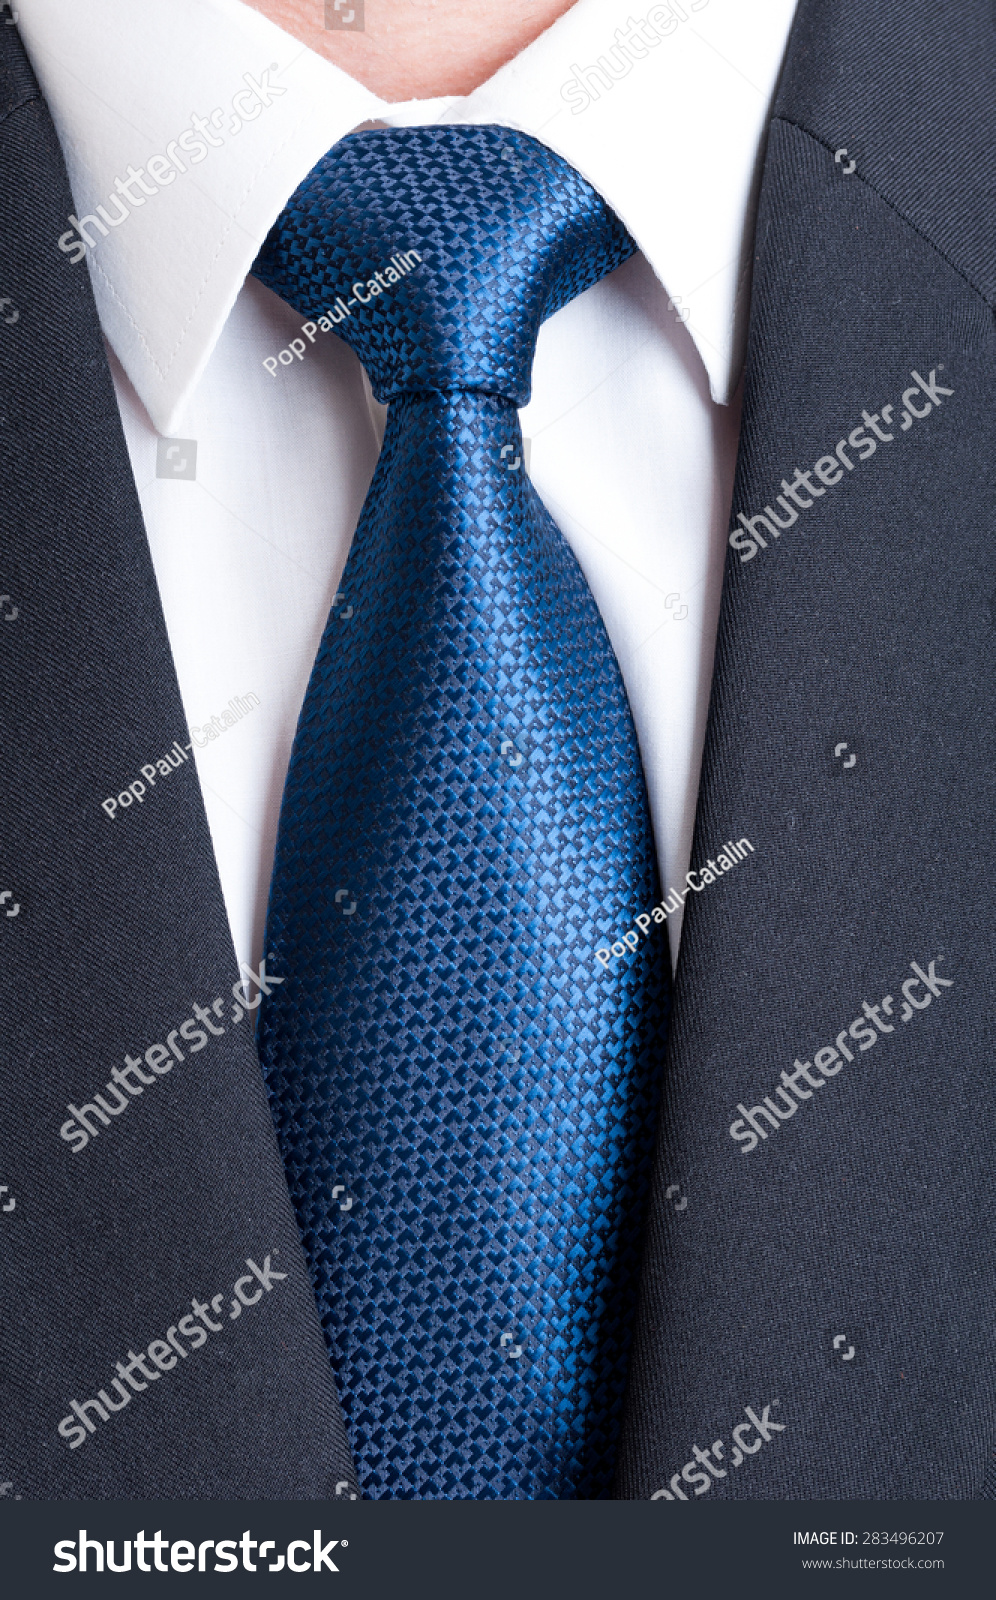 Black Suit White Shirt Blue Tie Stock Photo 283496207 - Shutterstock